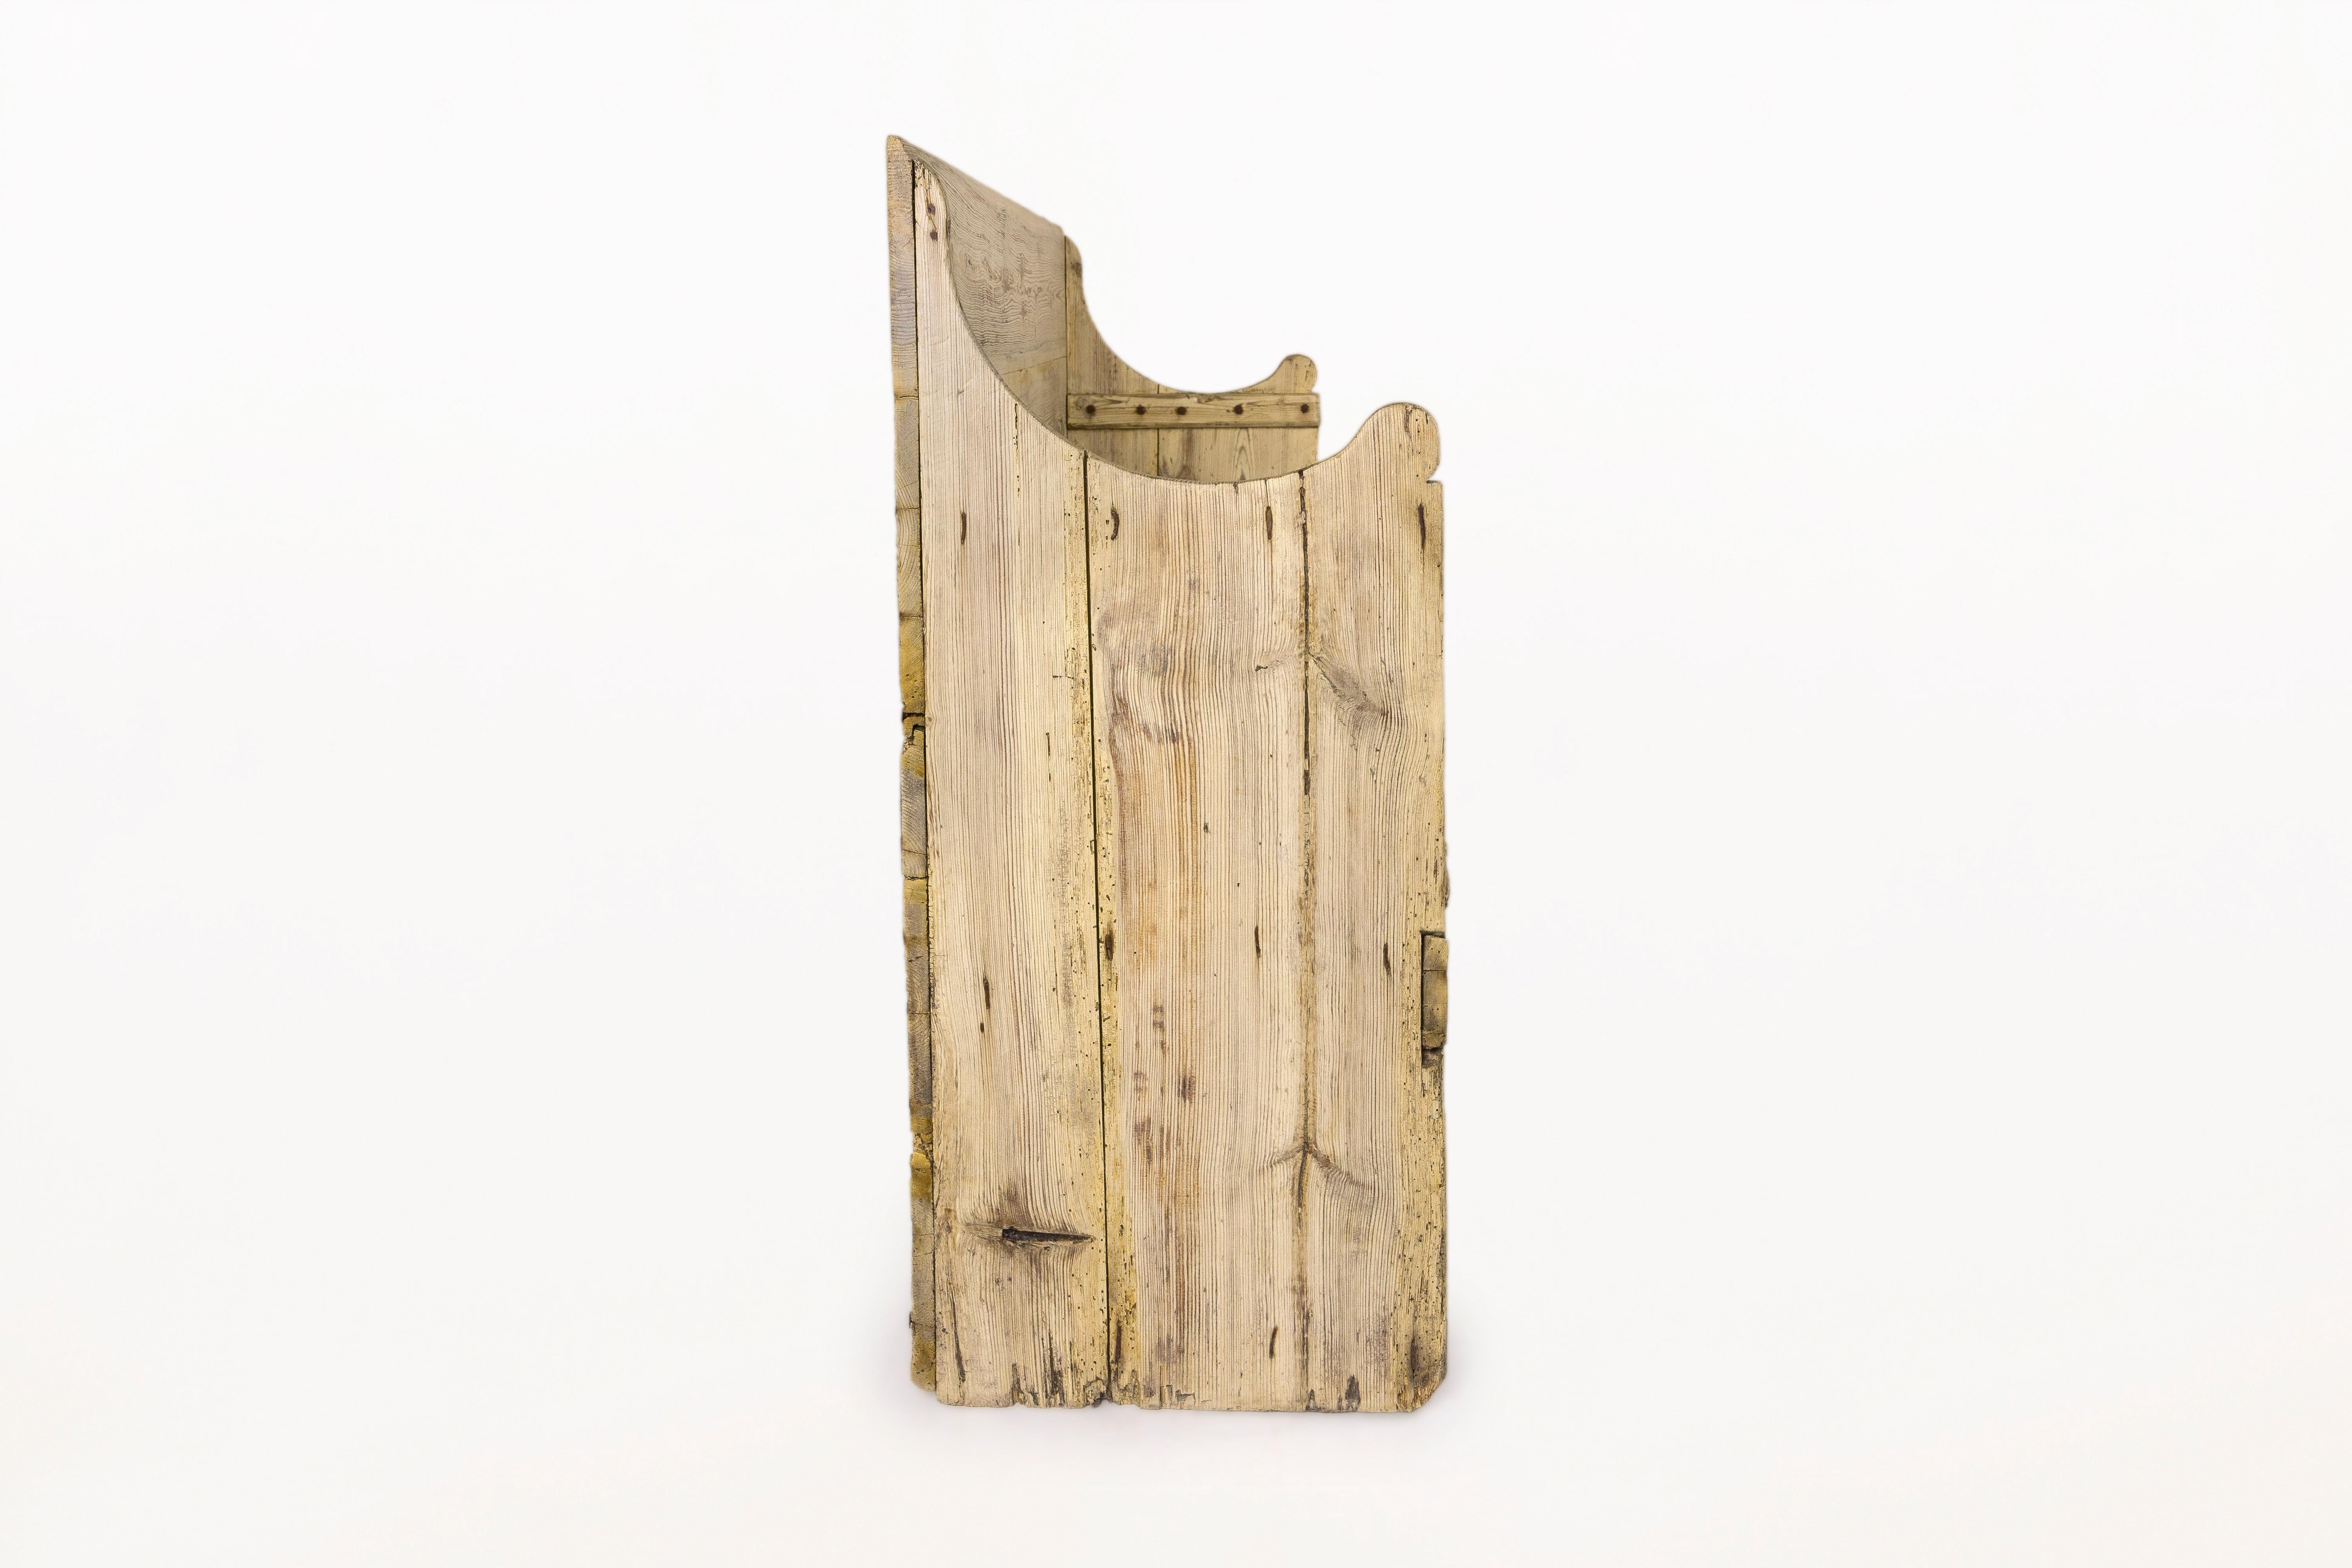 Spanish Rustic Pine Wood Bench, 19th Century, Spain